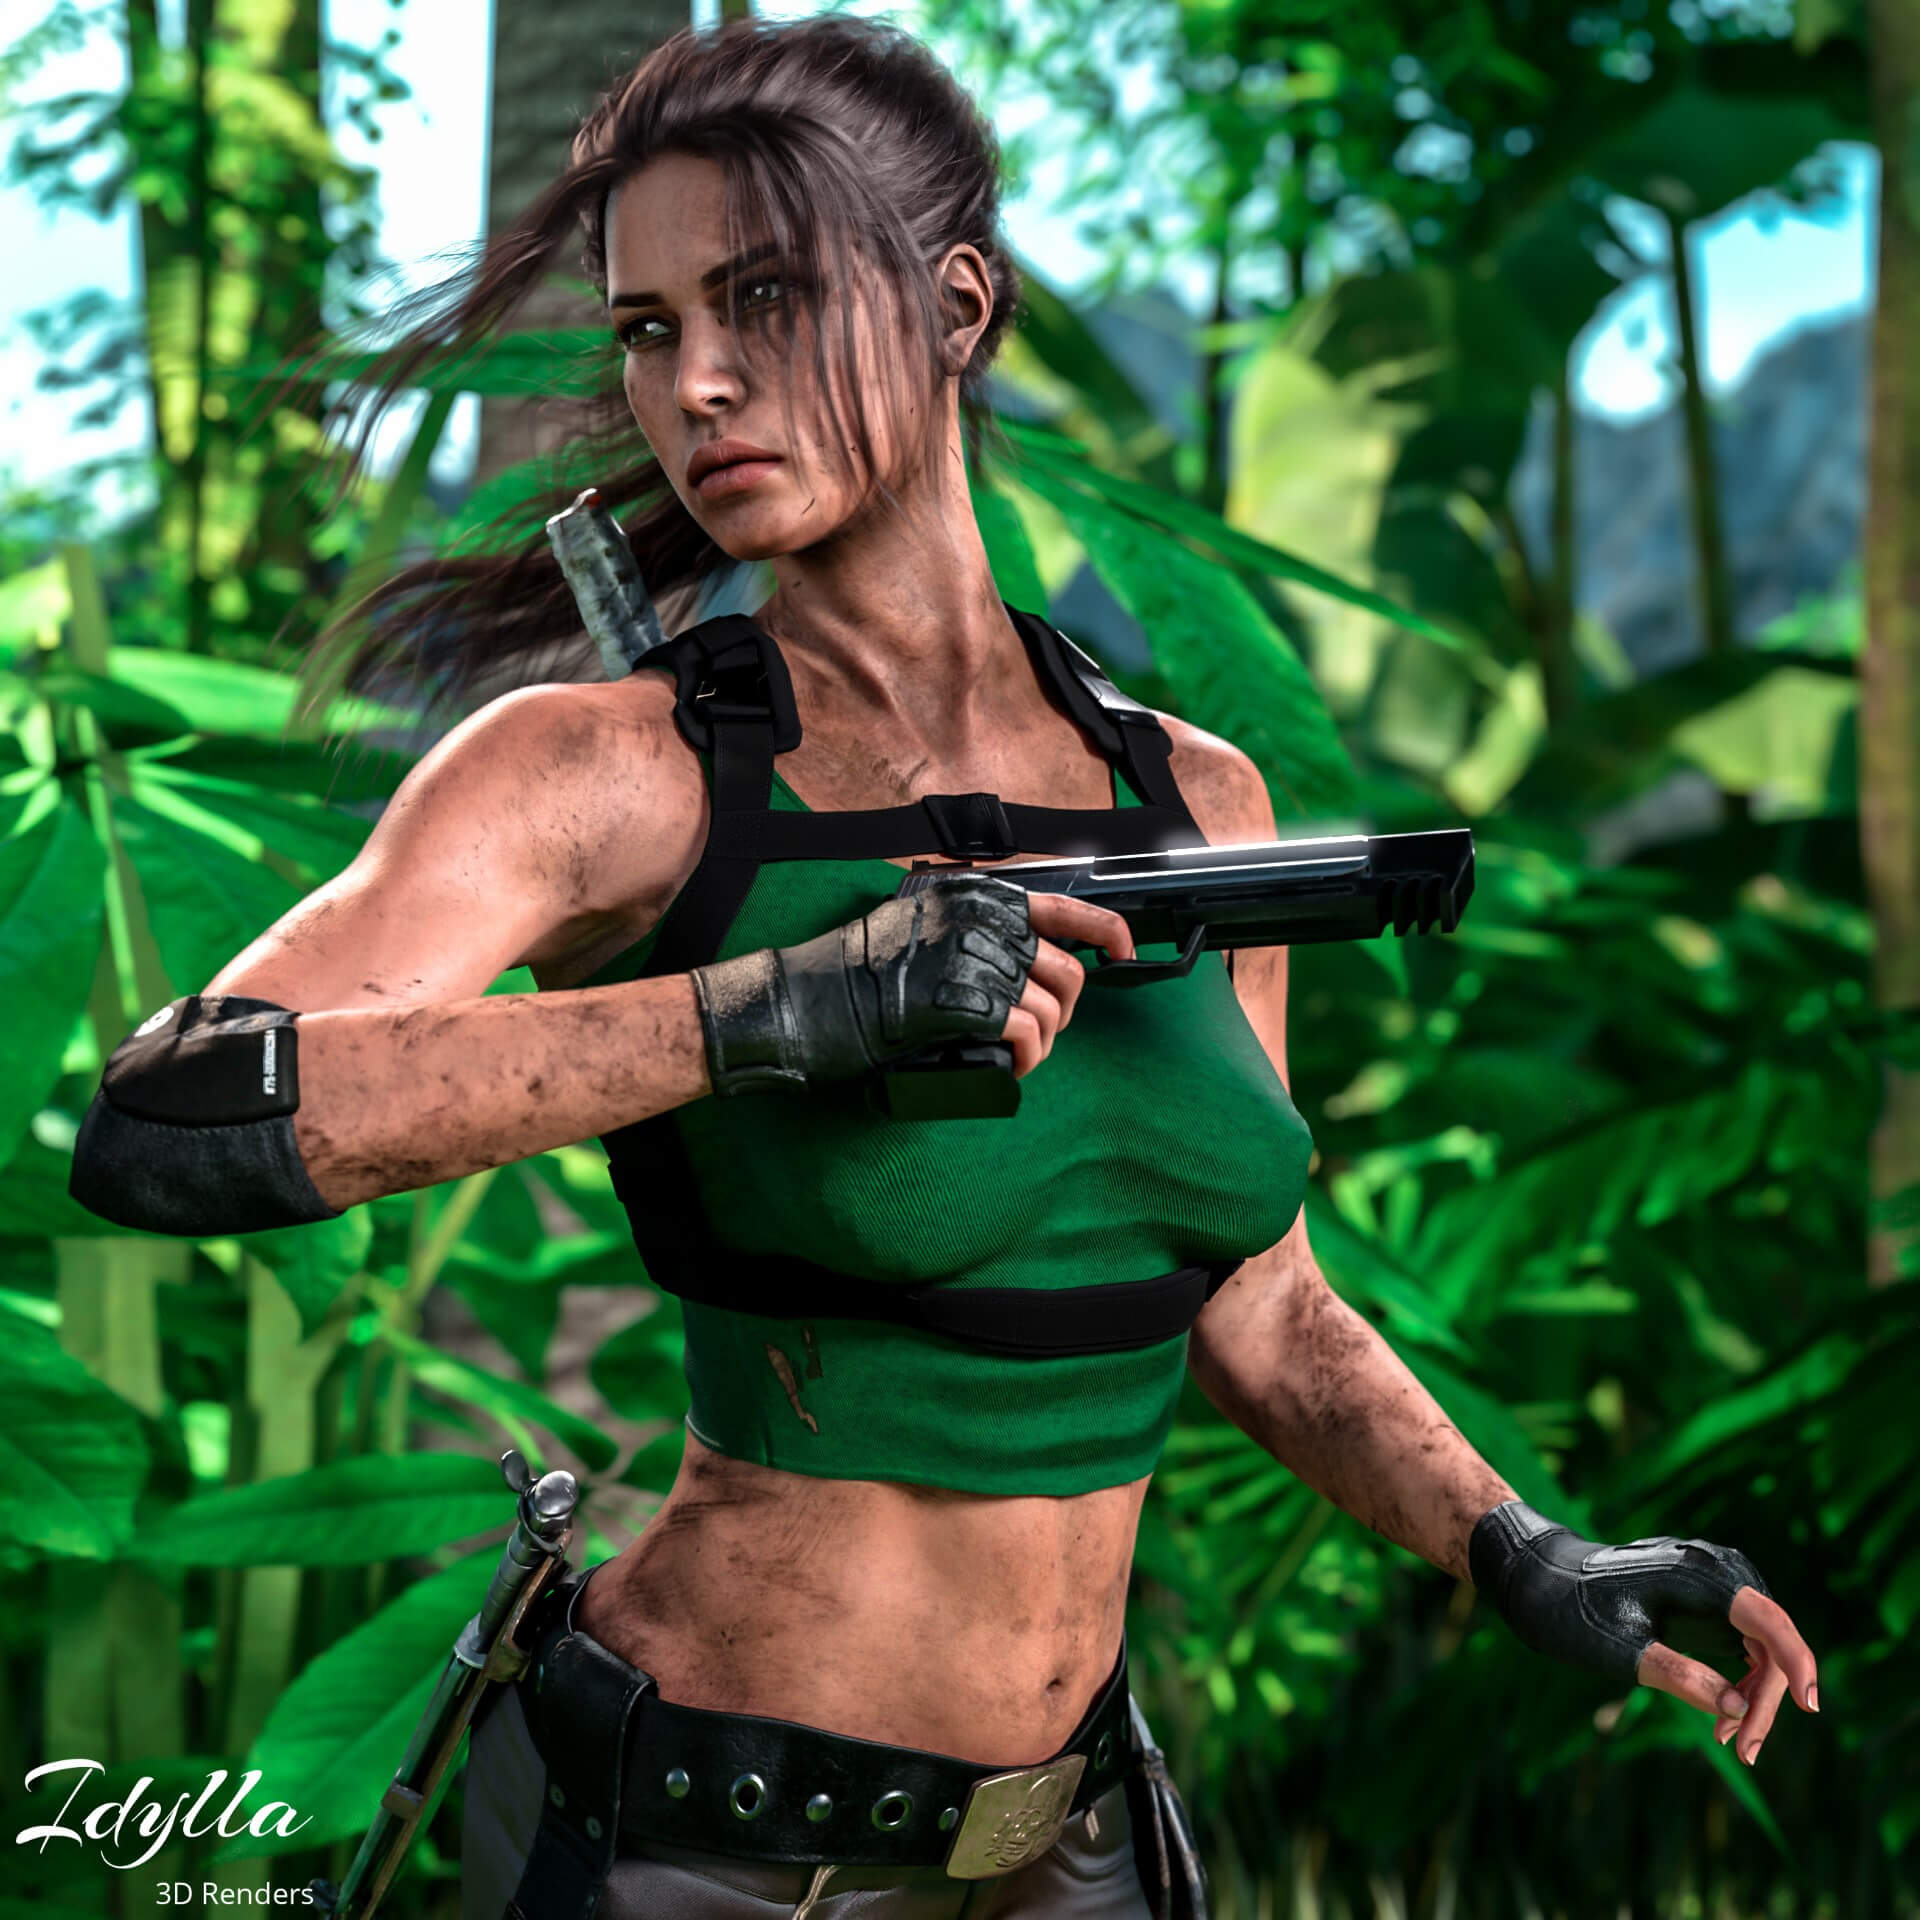 Best of Lara croft 3d videos